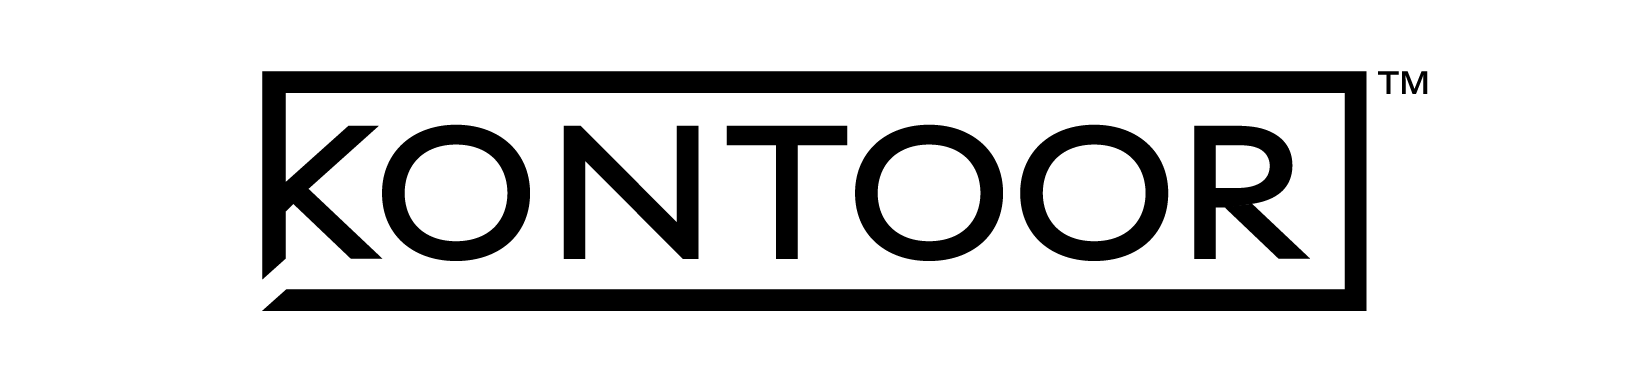 Kontoor Brands logo